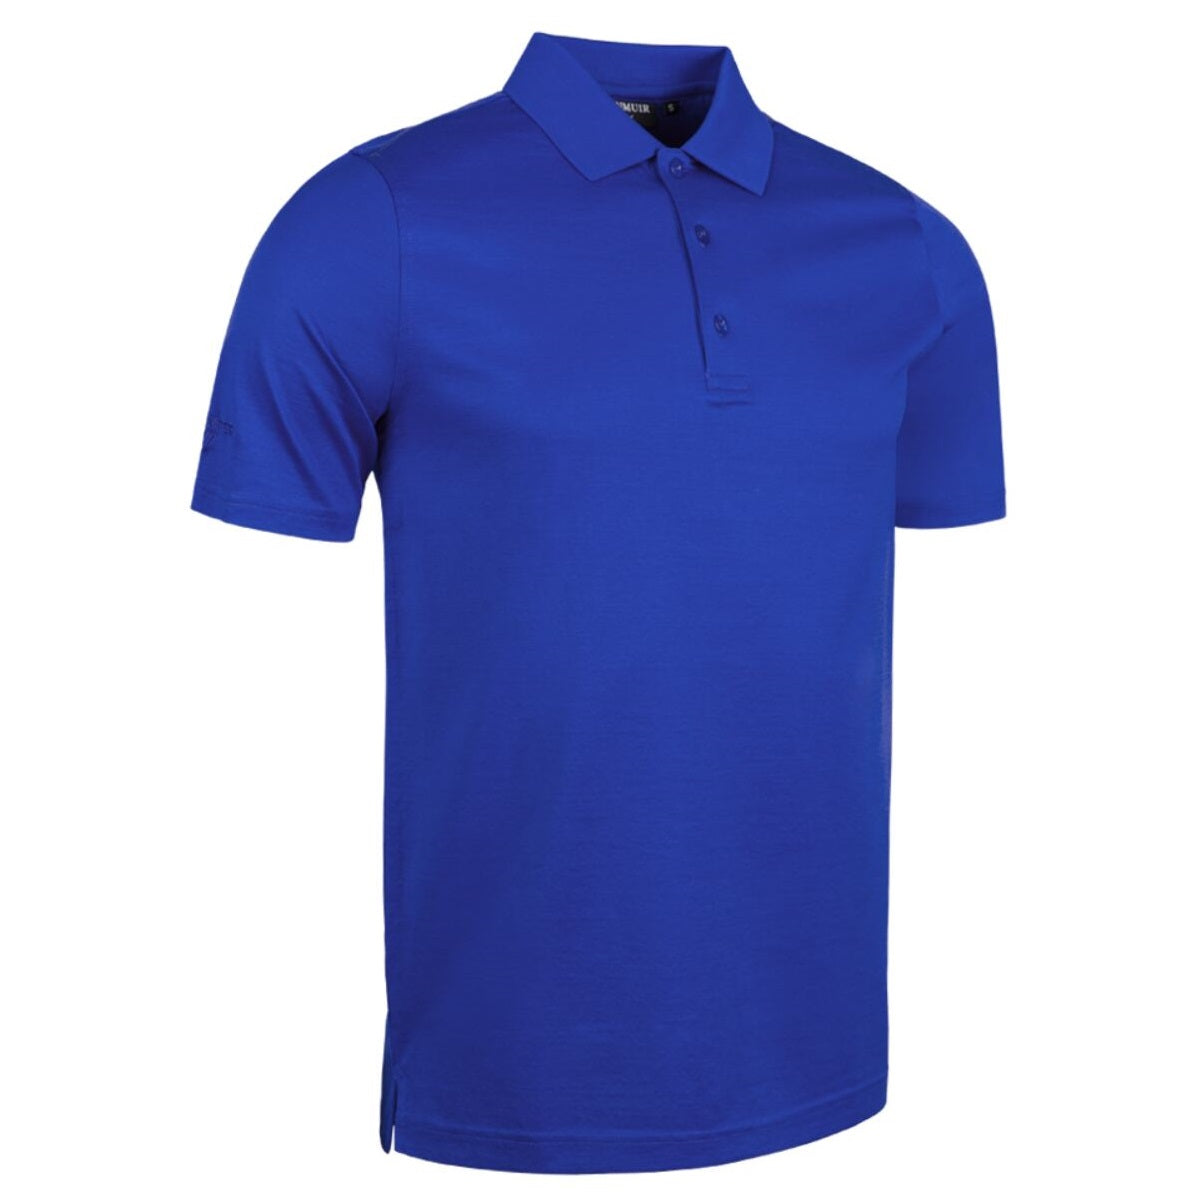 GLENMUIR Tarth Mercerised Cotton Polo Shirt - Mens - Ascot Blue